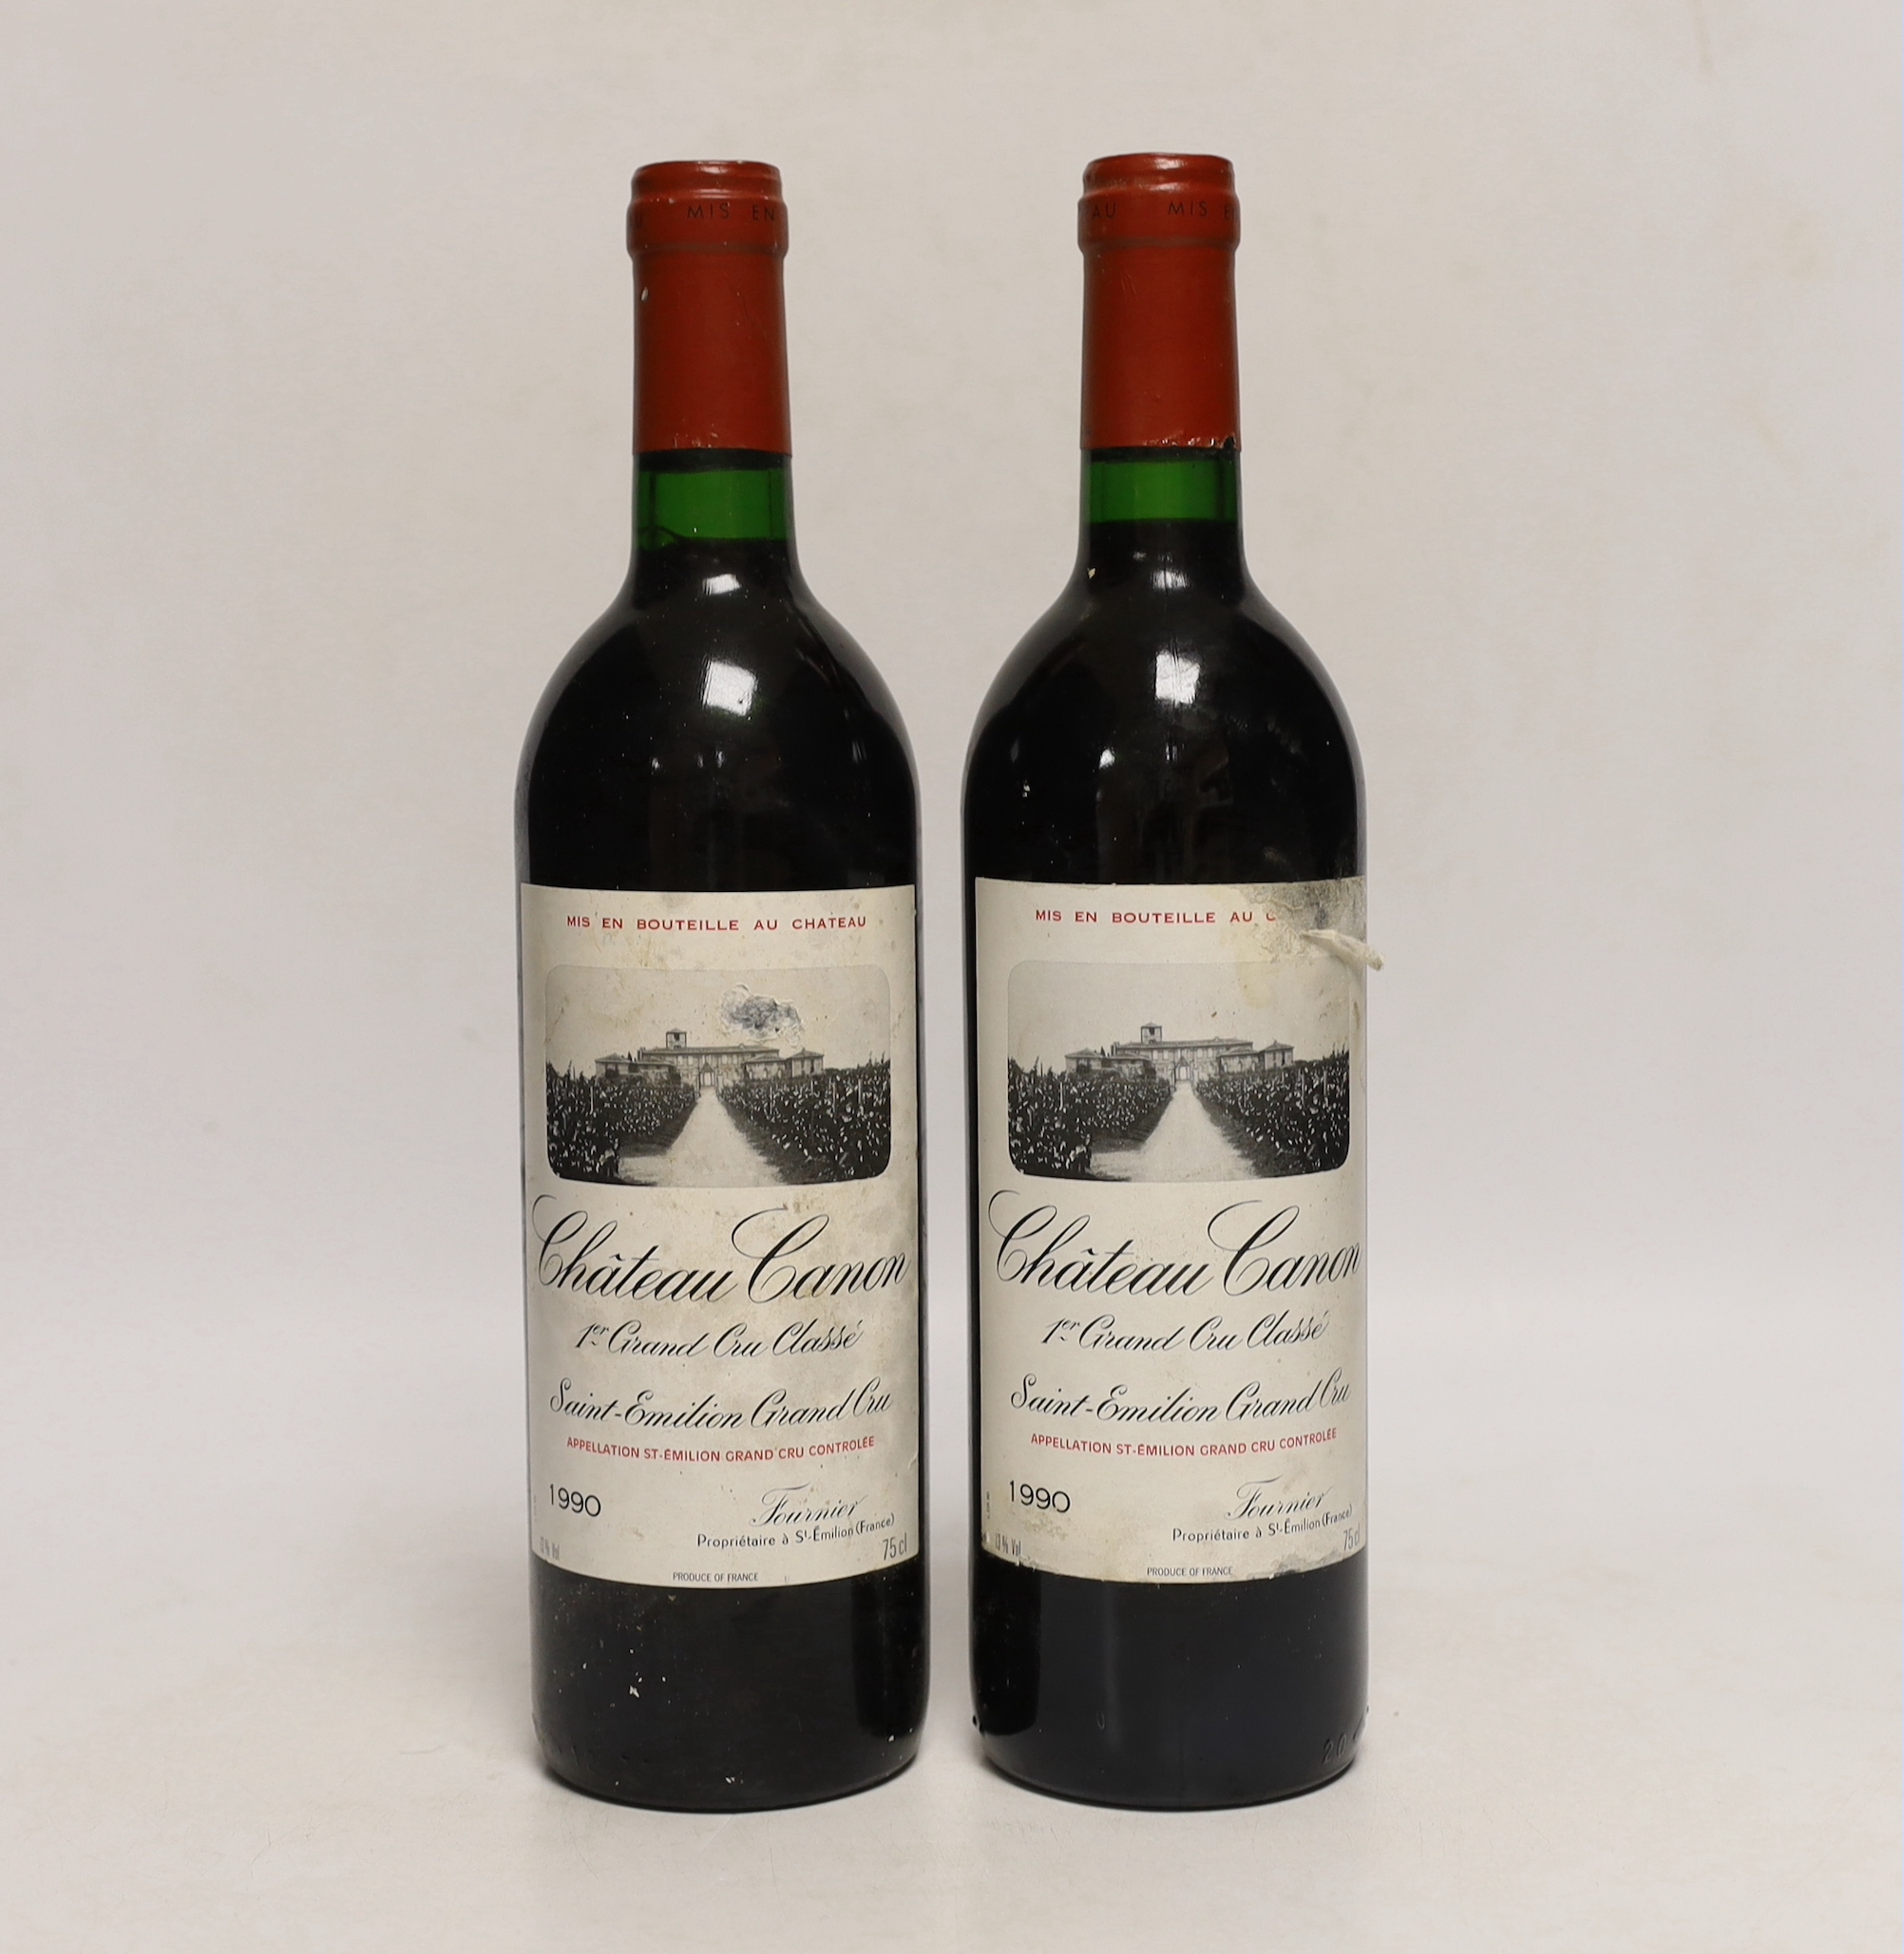 Two bottles of Chateau Canon, Saint- Emilion Grande Cru, 1990